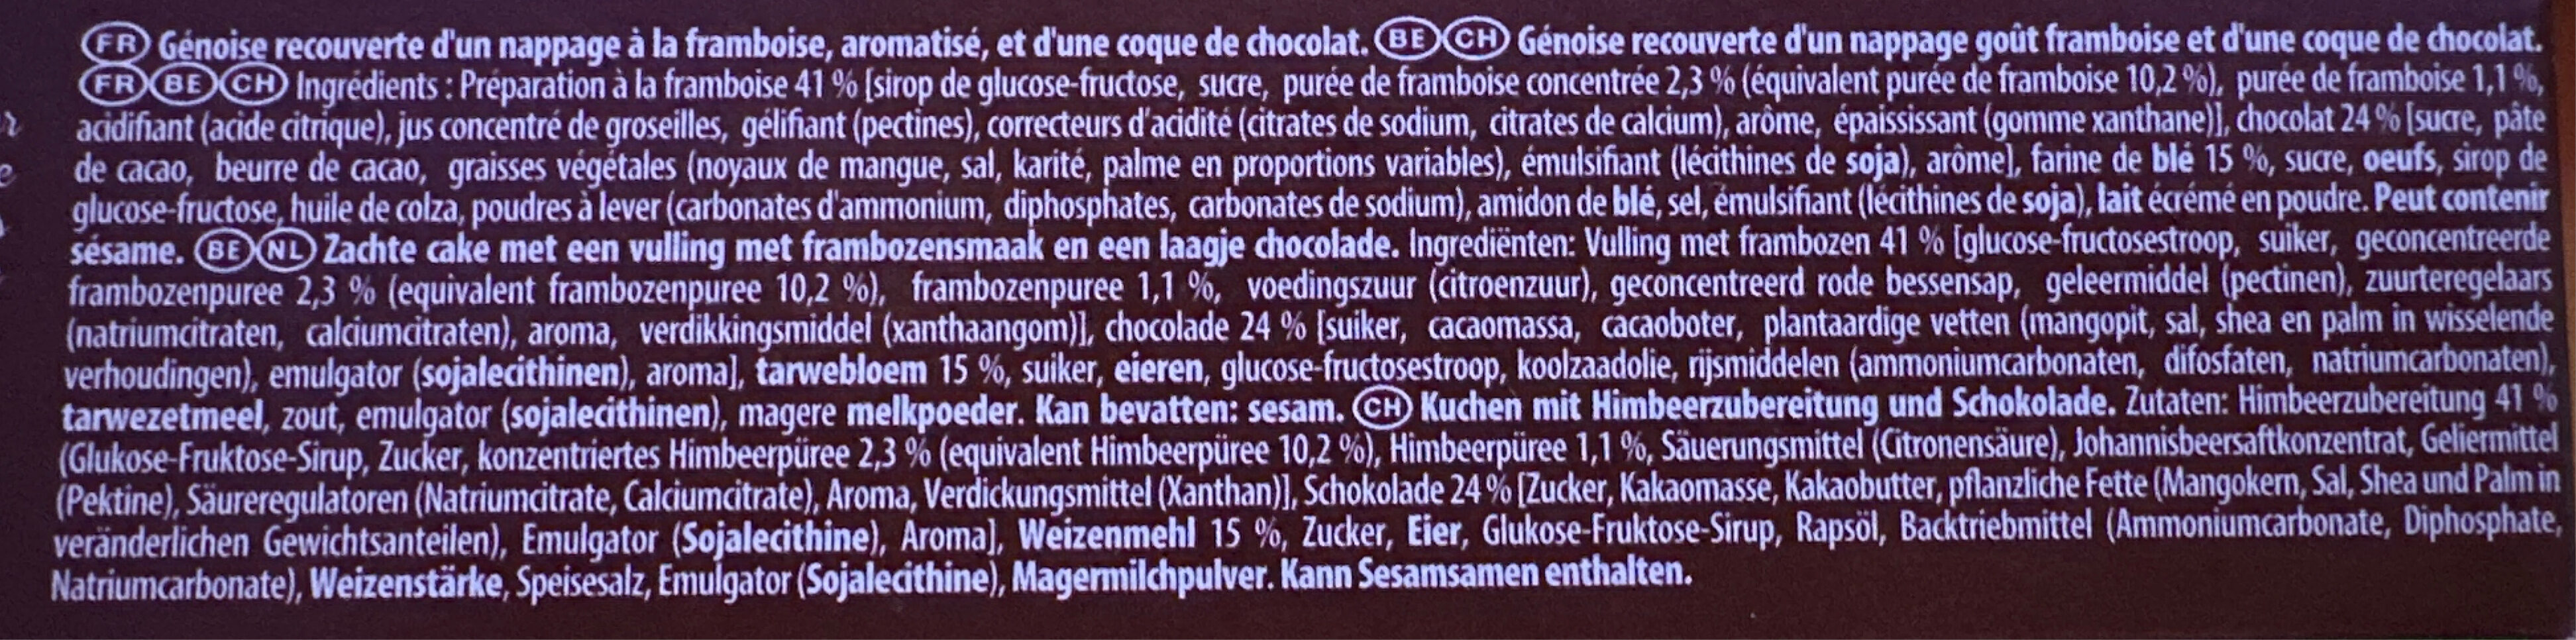 Pim's framboise - Ingredients - fr